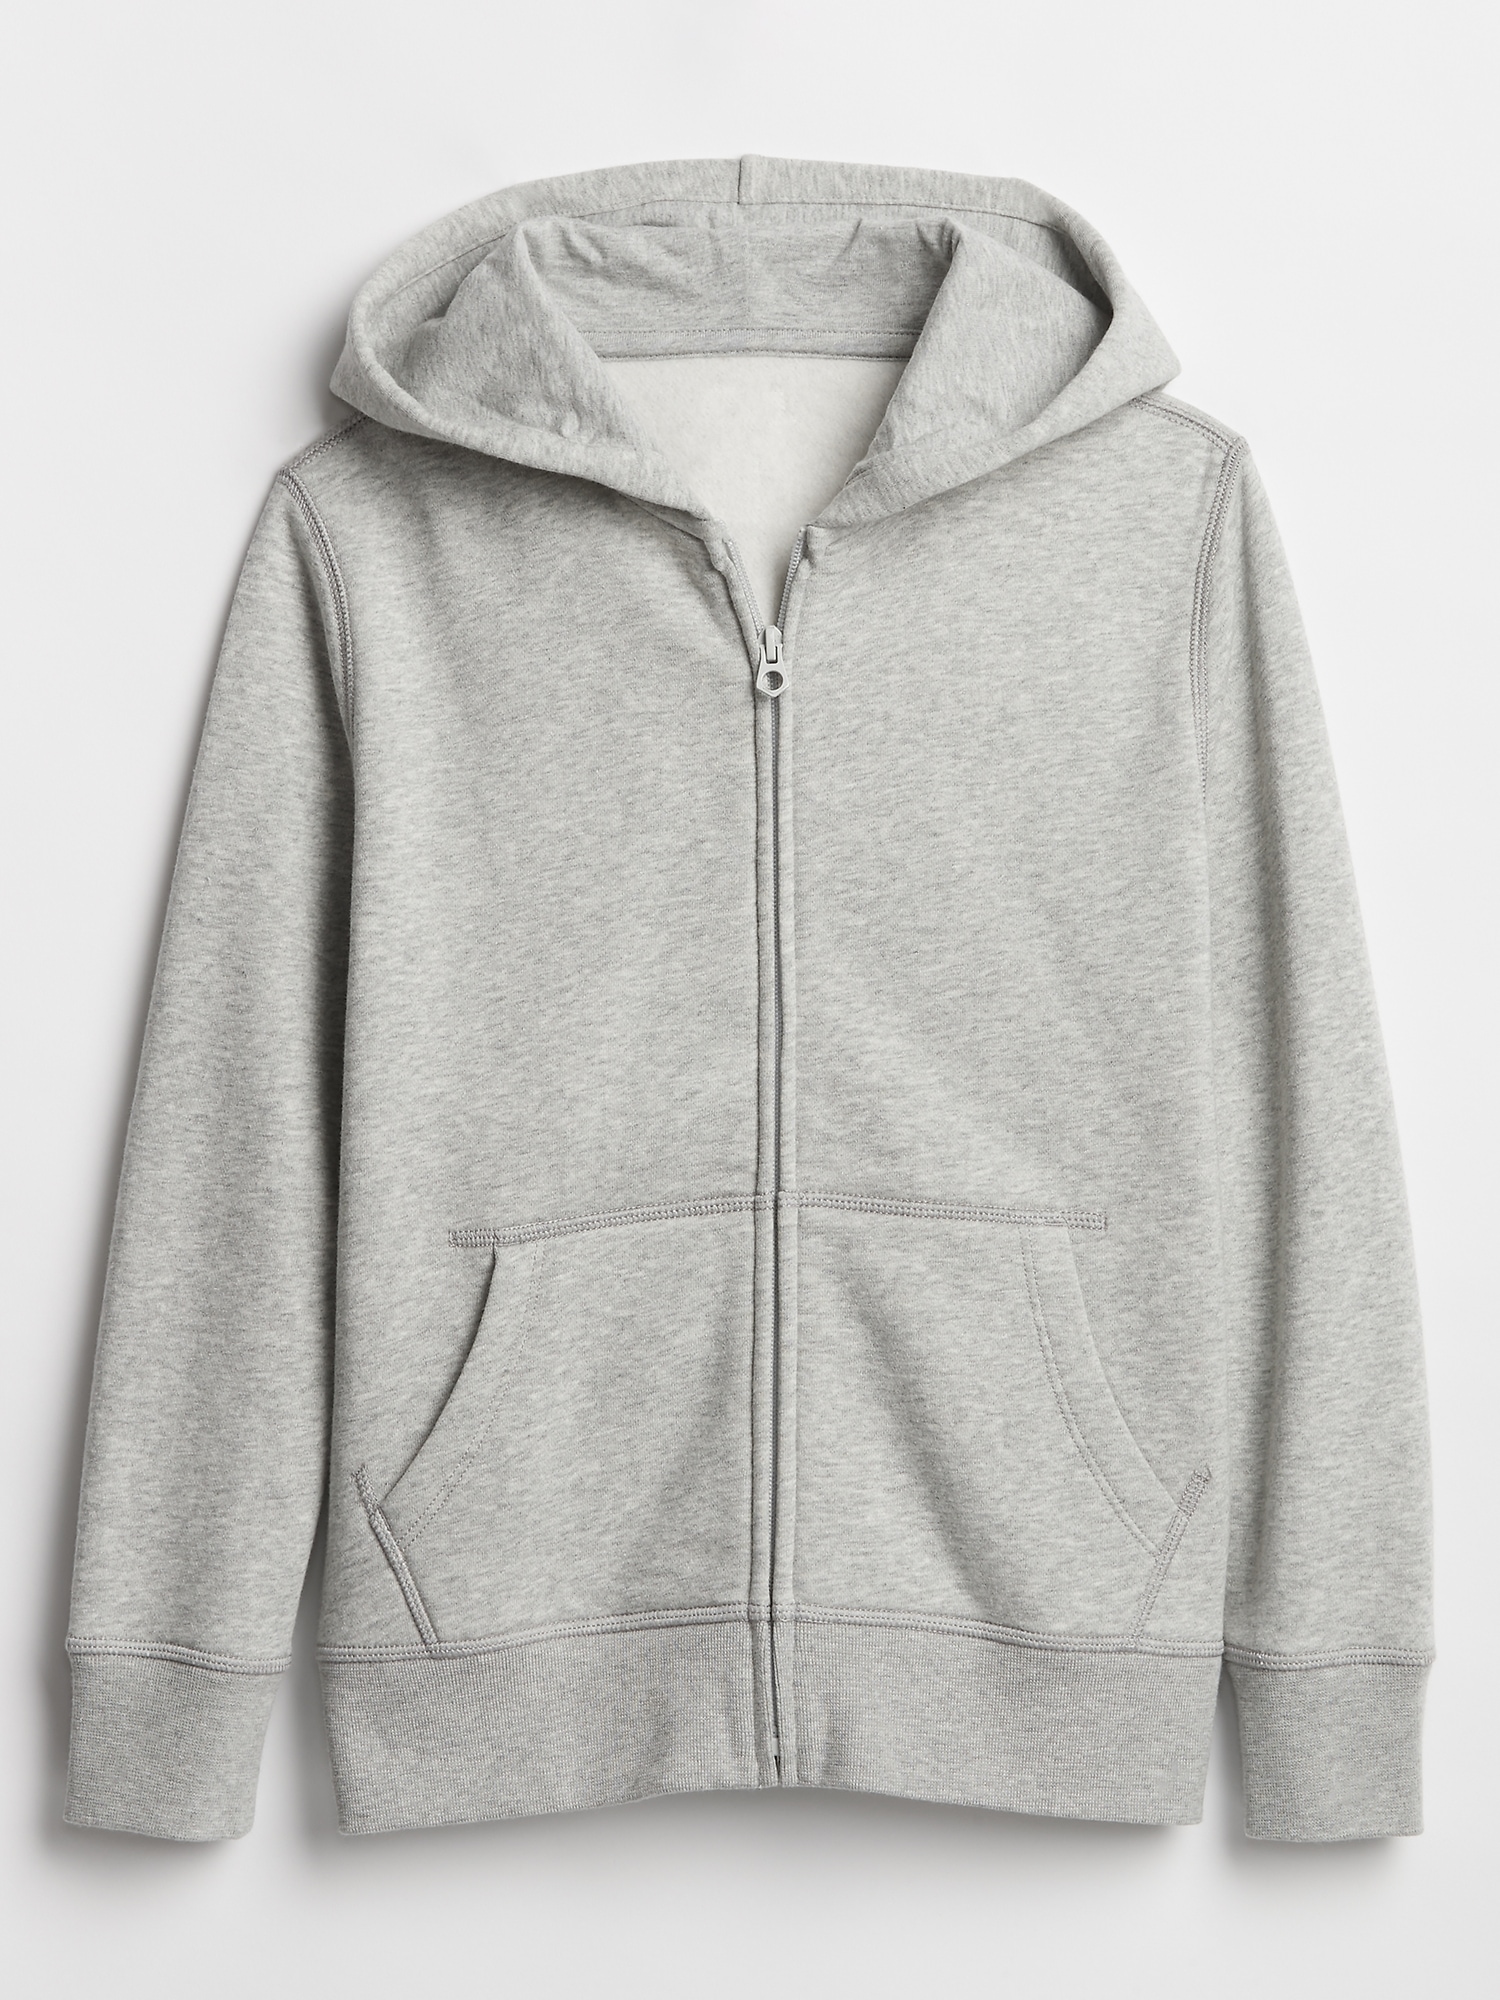 discount 94% ZY sweatshirt Gray 18-24M KIDS FASHION Jumpers & Sweatshirts Zip 